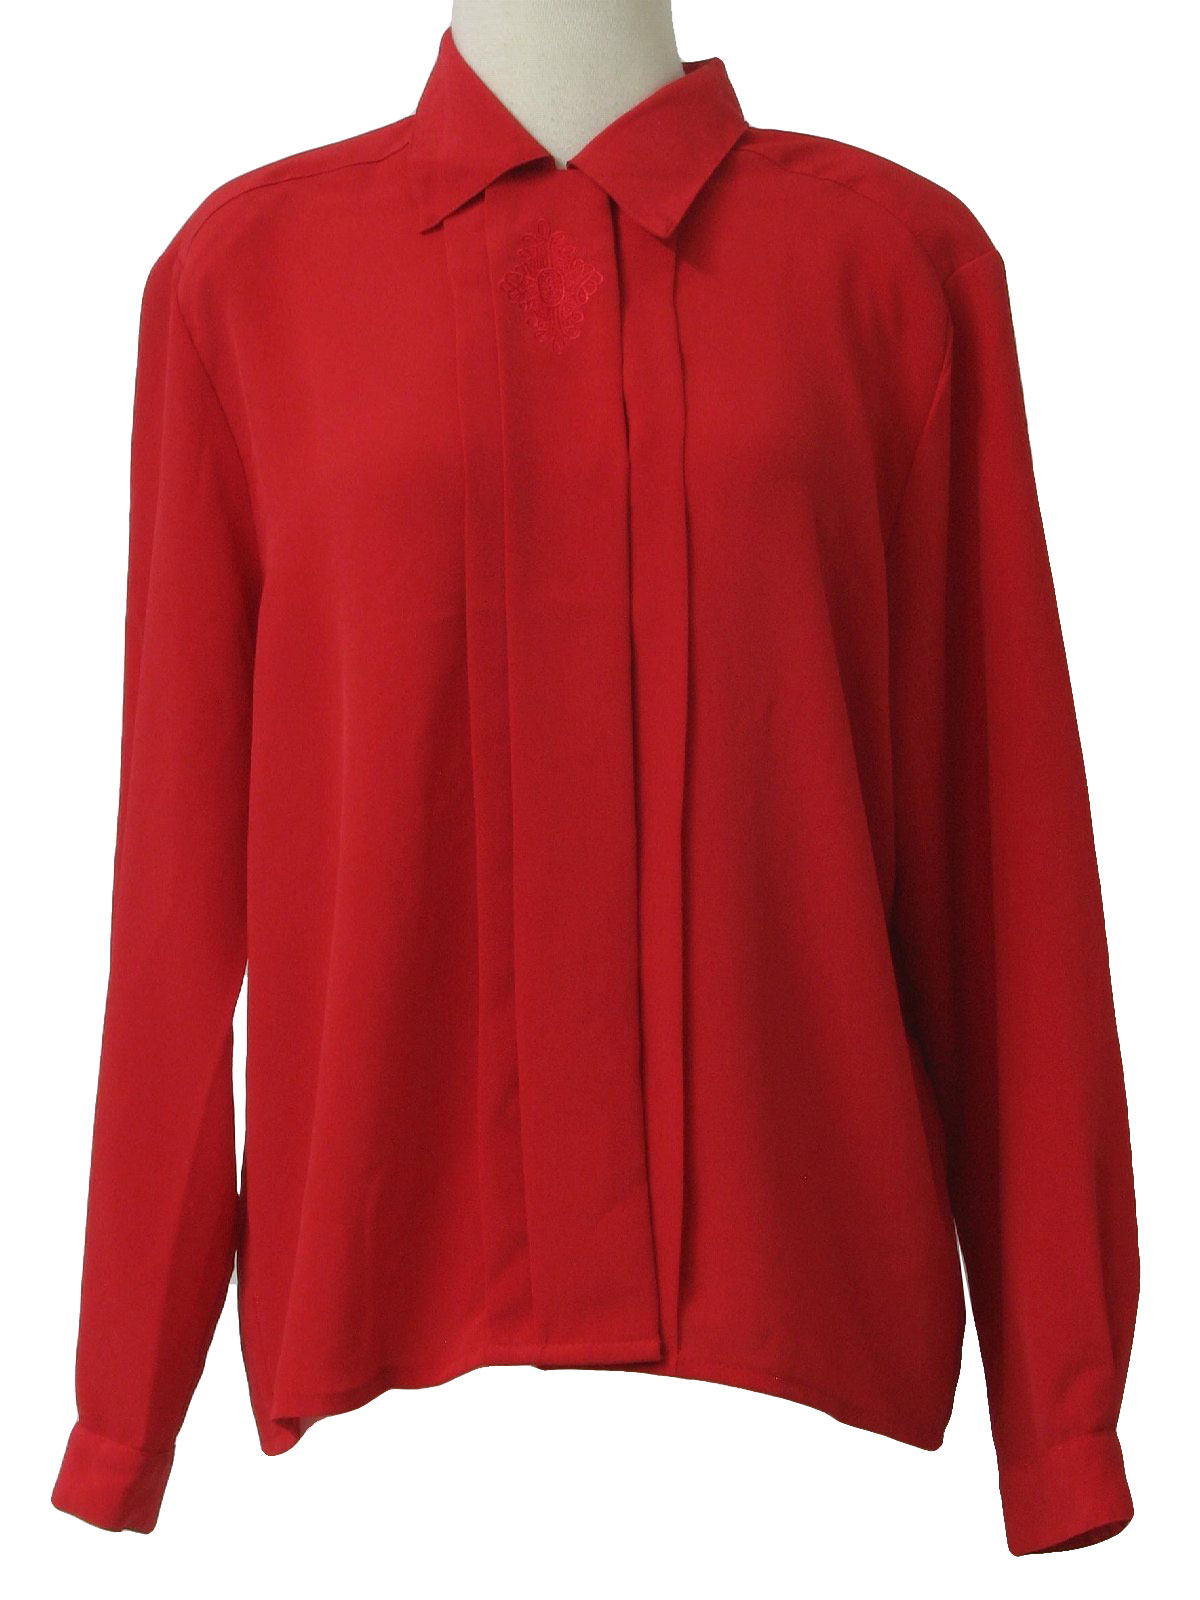 Retro 80s Shirt (Impressions) : 80s -Impressions- Womens true red silky ...